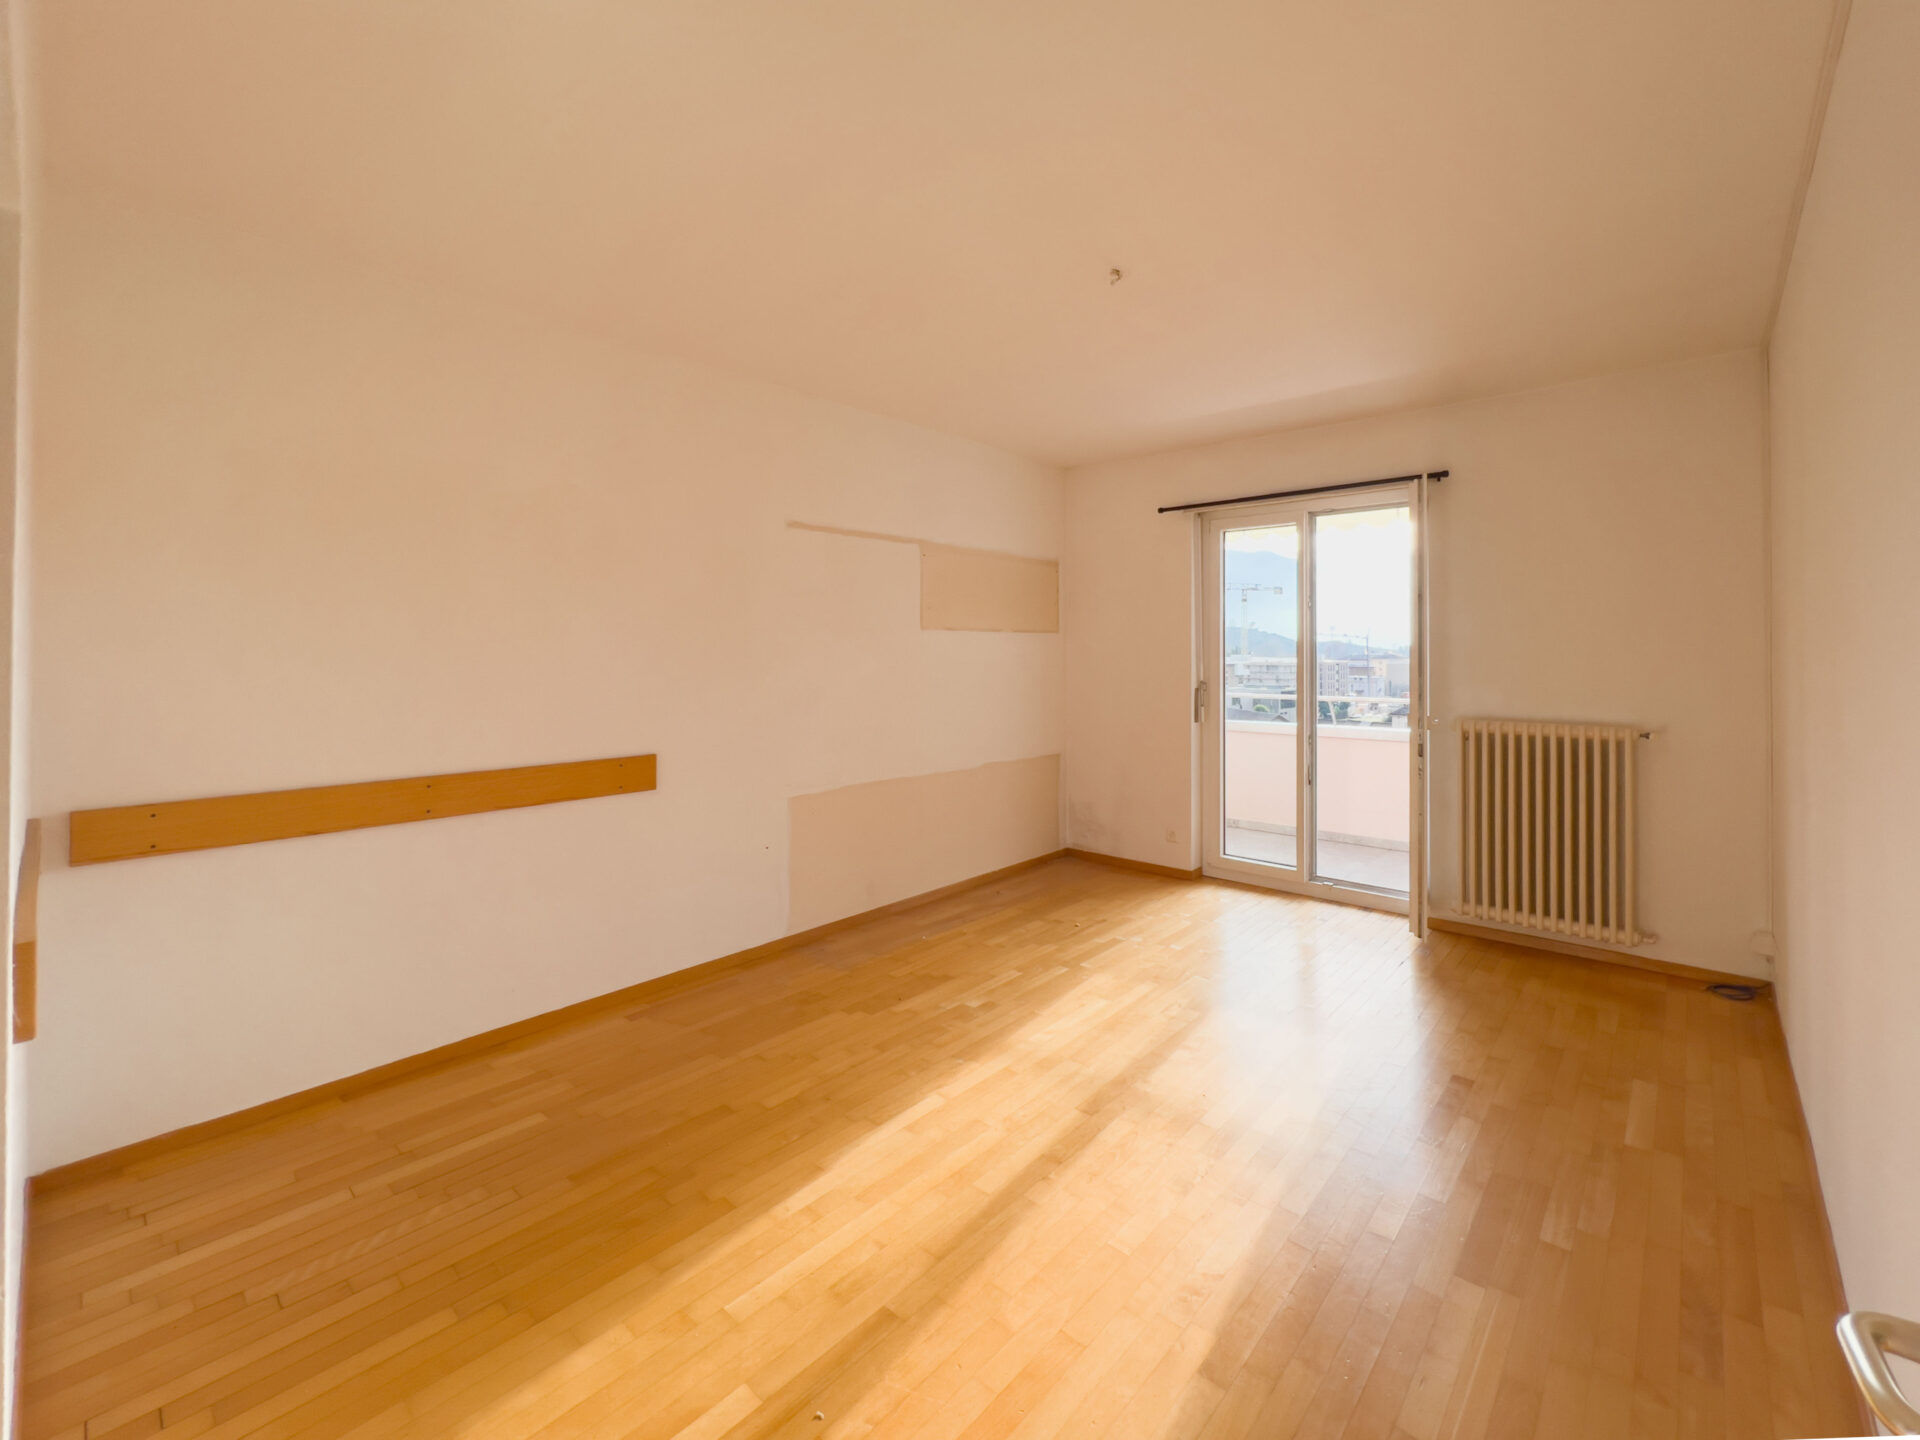 3.5-room apartment for sale in Bellinzona